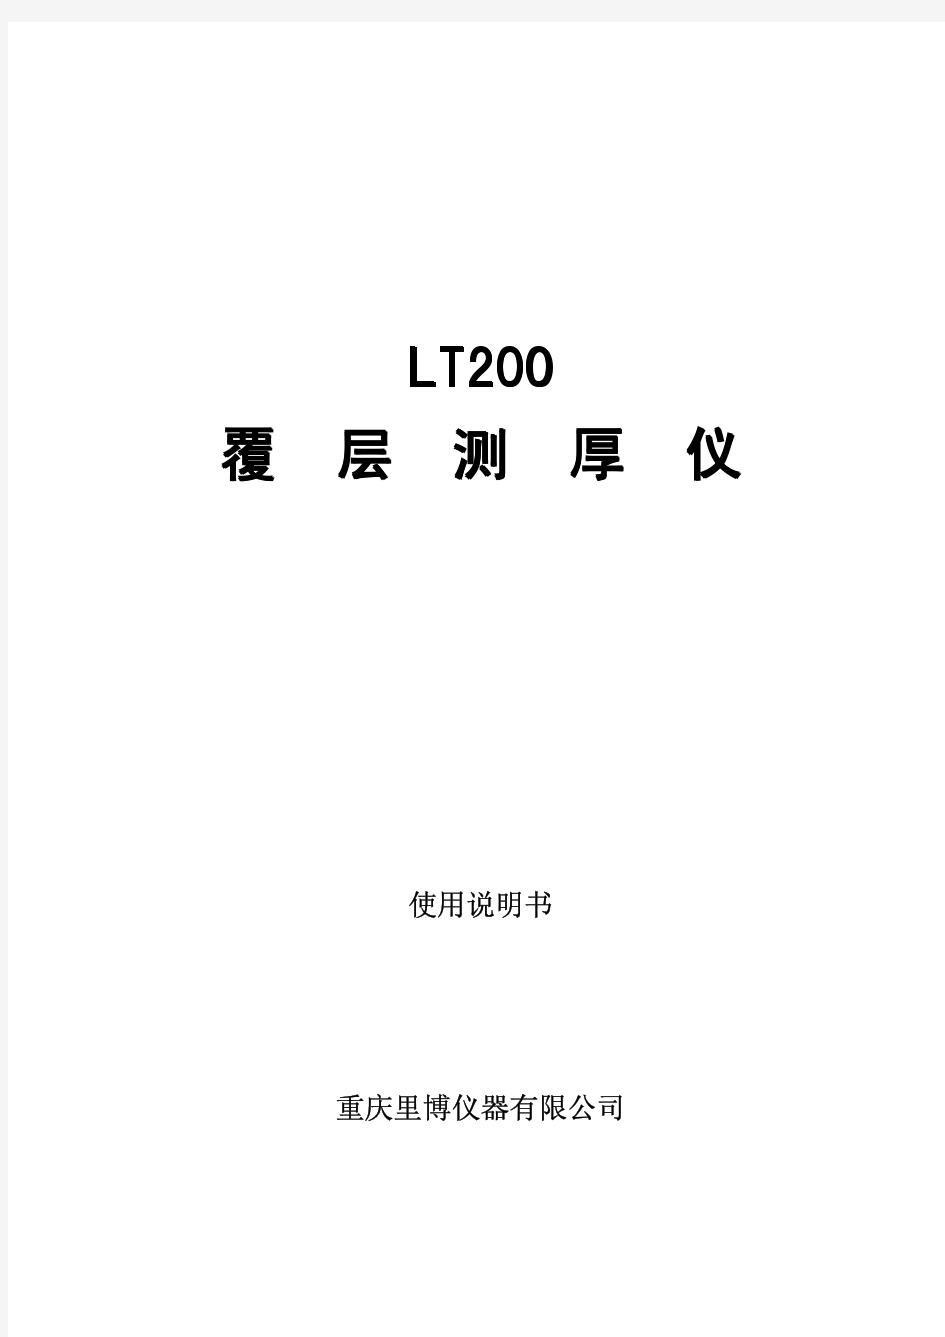 LT200重庆里博说明书(测厚仪)